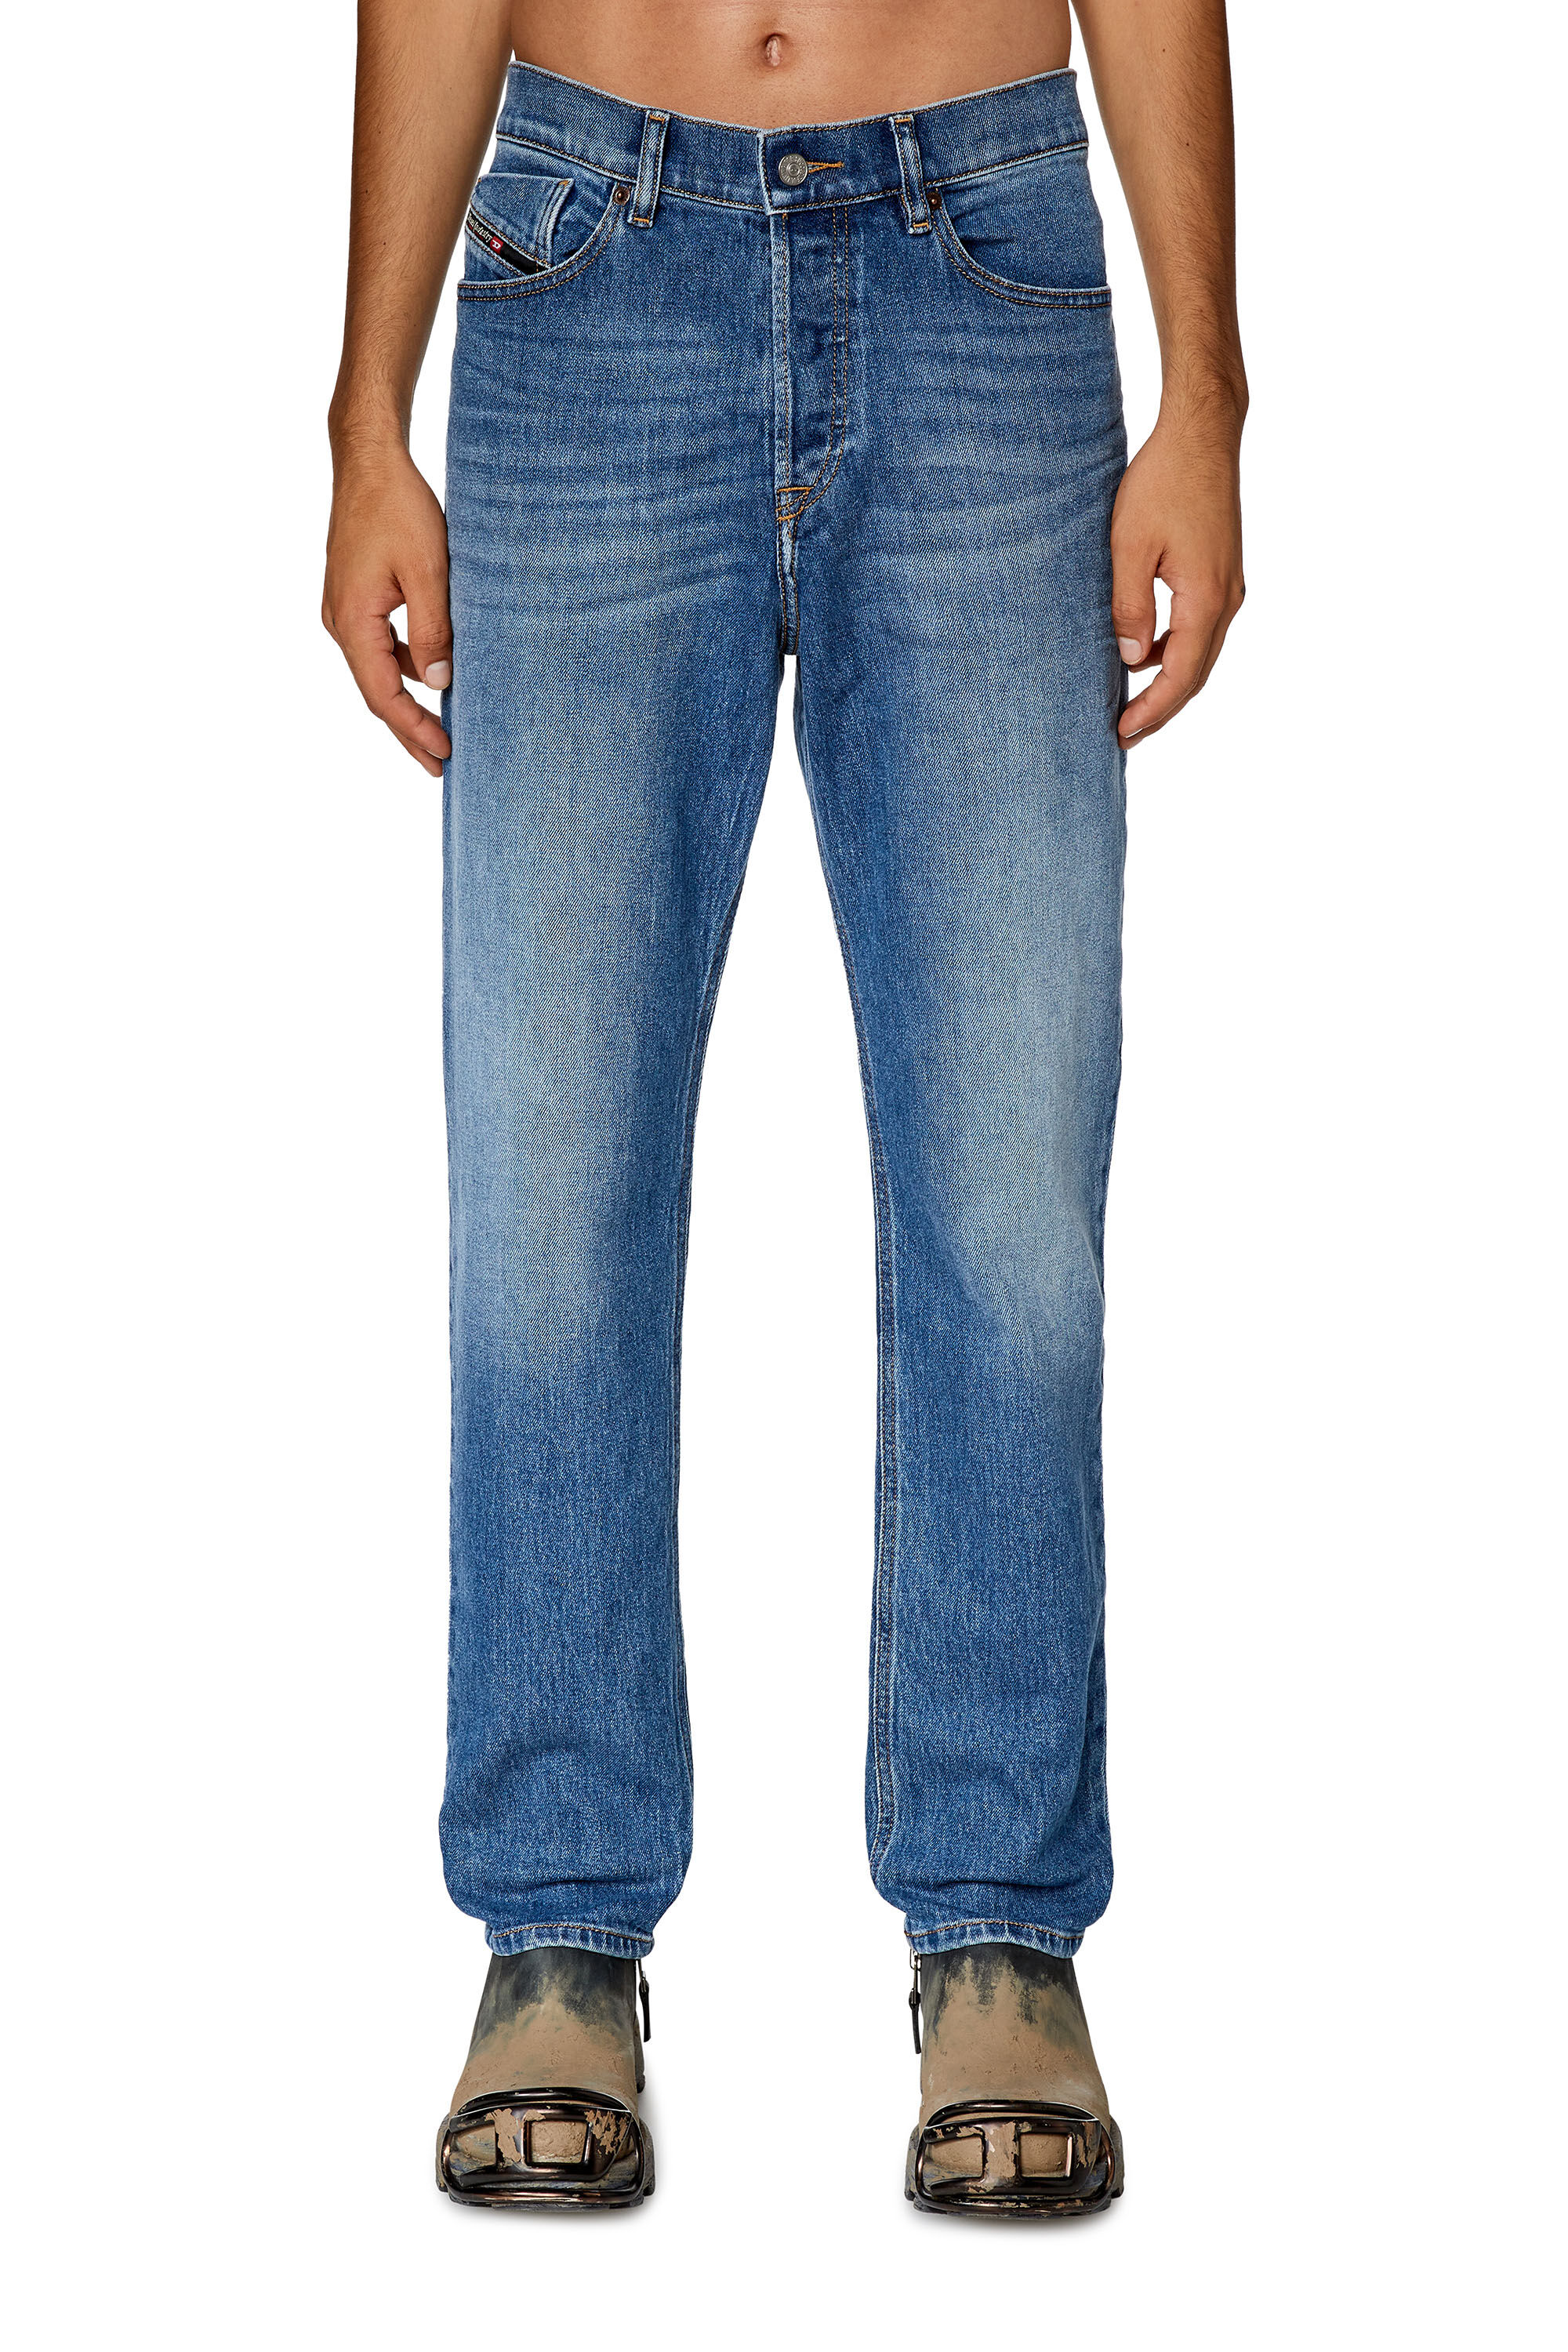 Men's Tapered Jeans | Medium blue | Diesel 2005 D-Fining